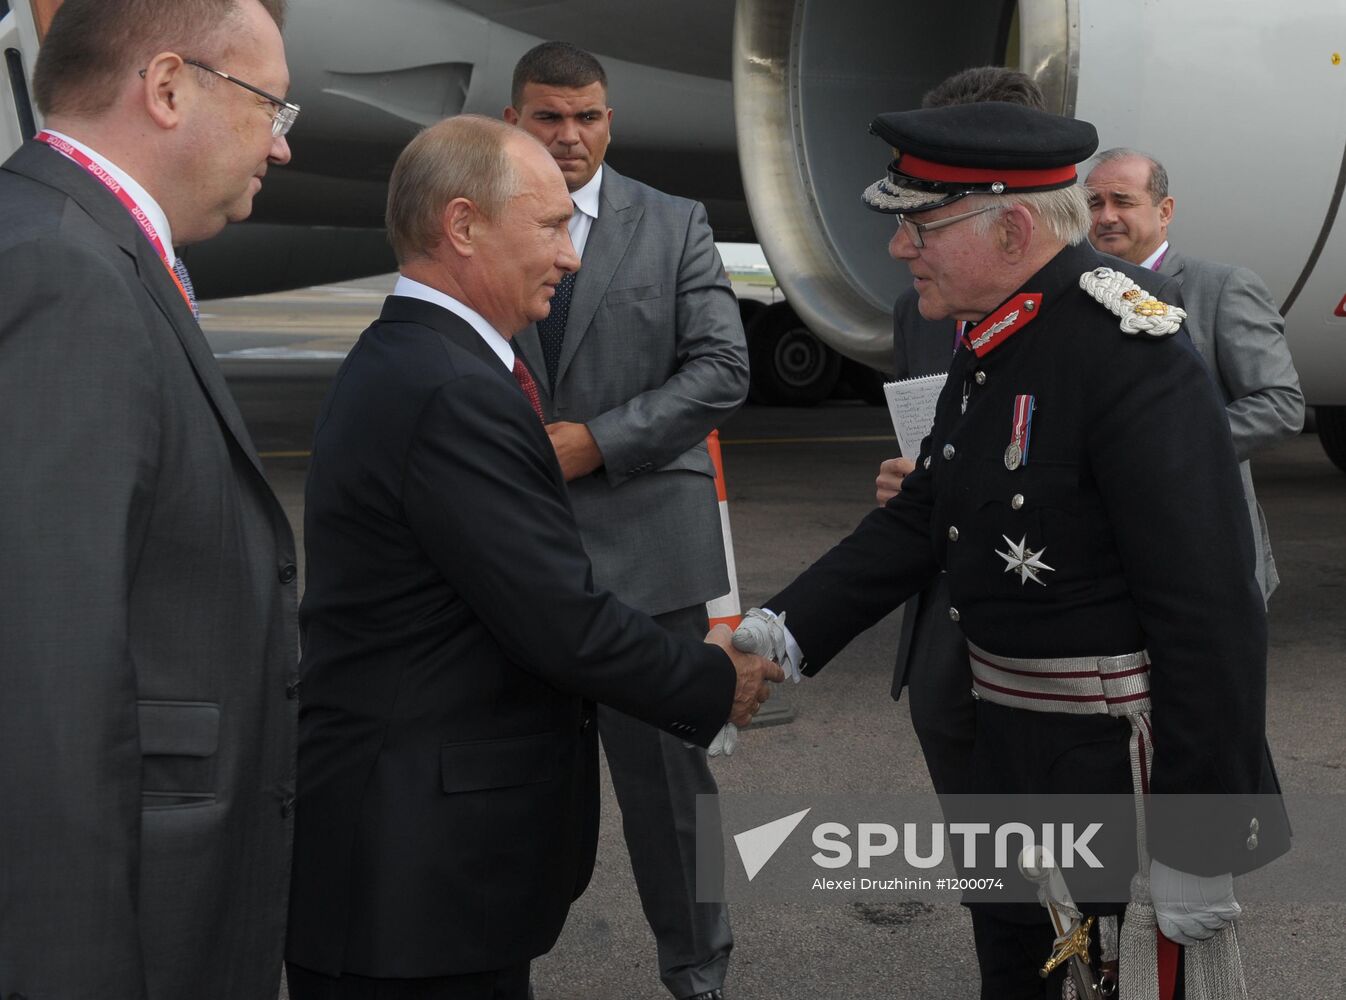 President Vladimir Putin visits Great Britain